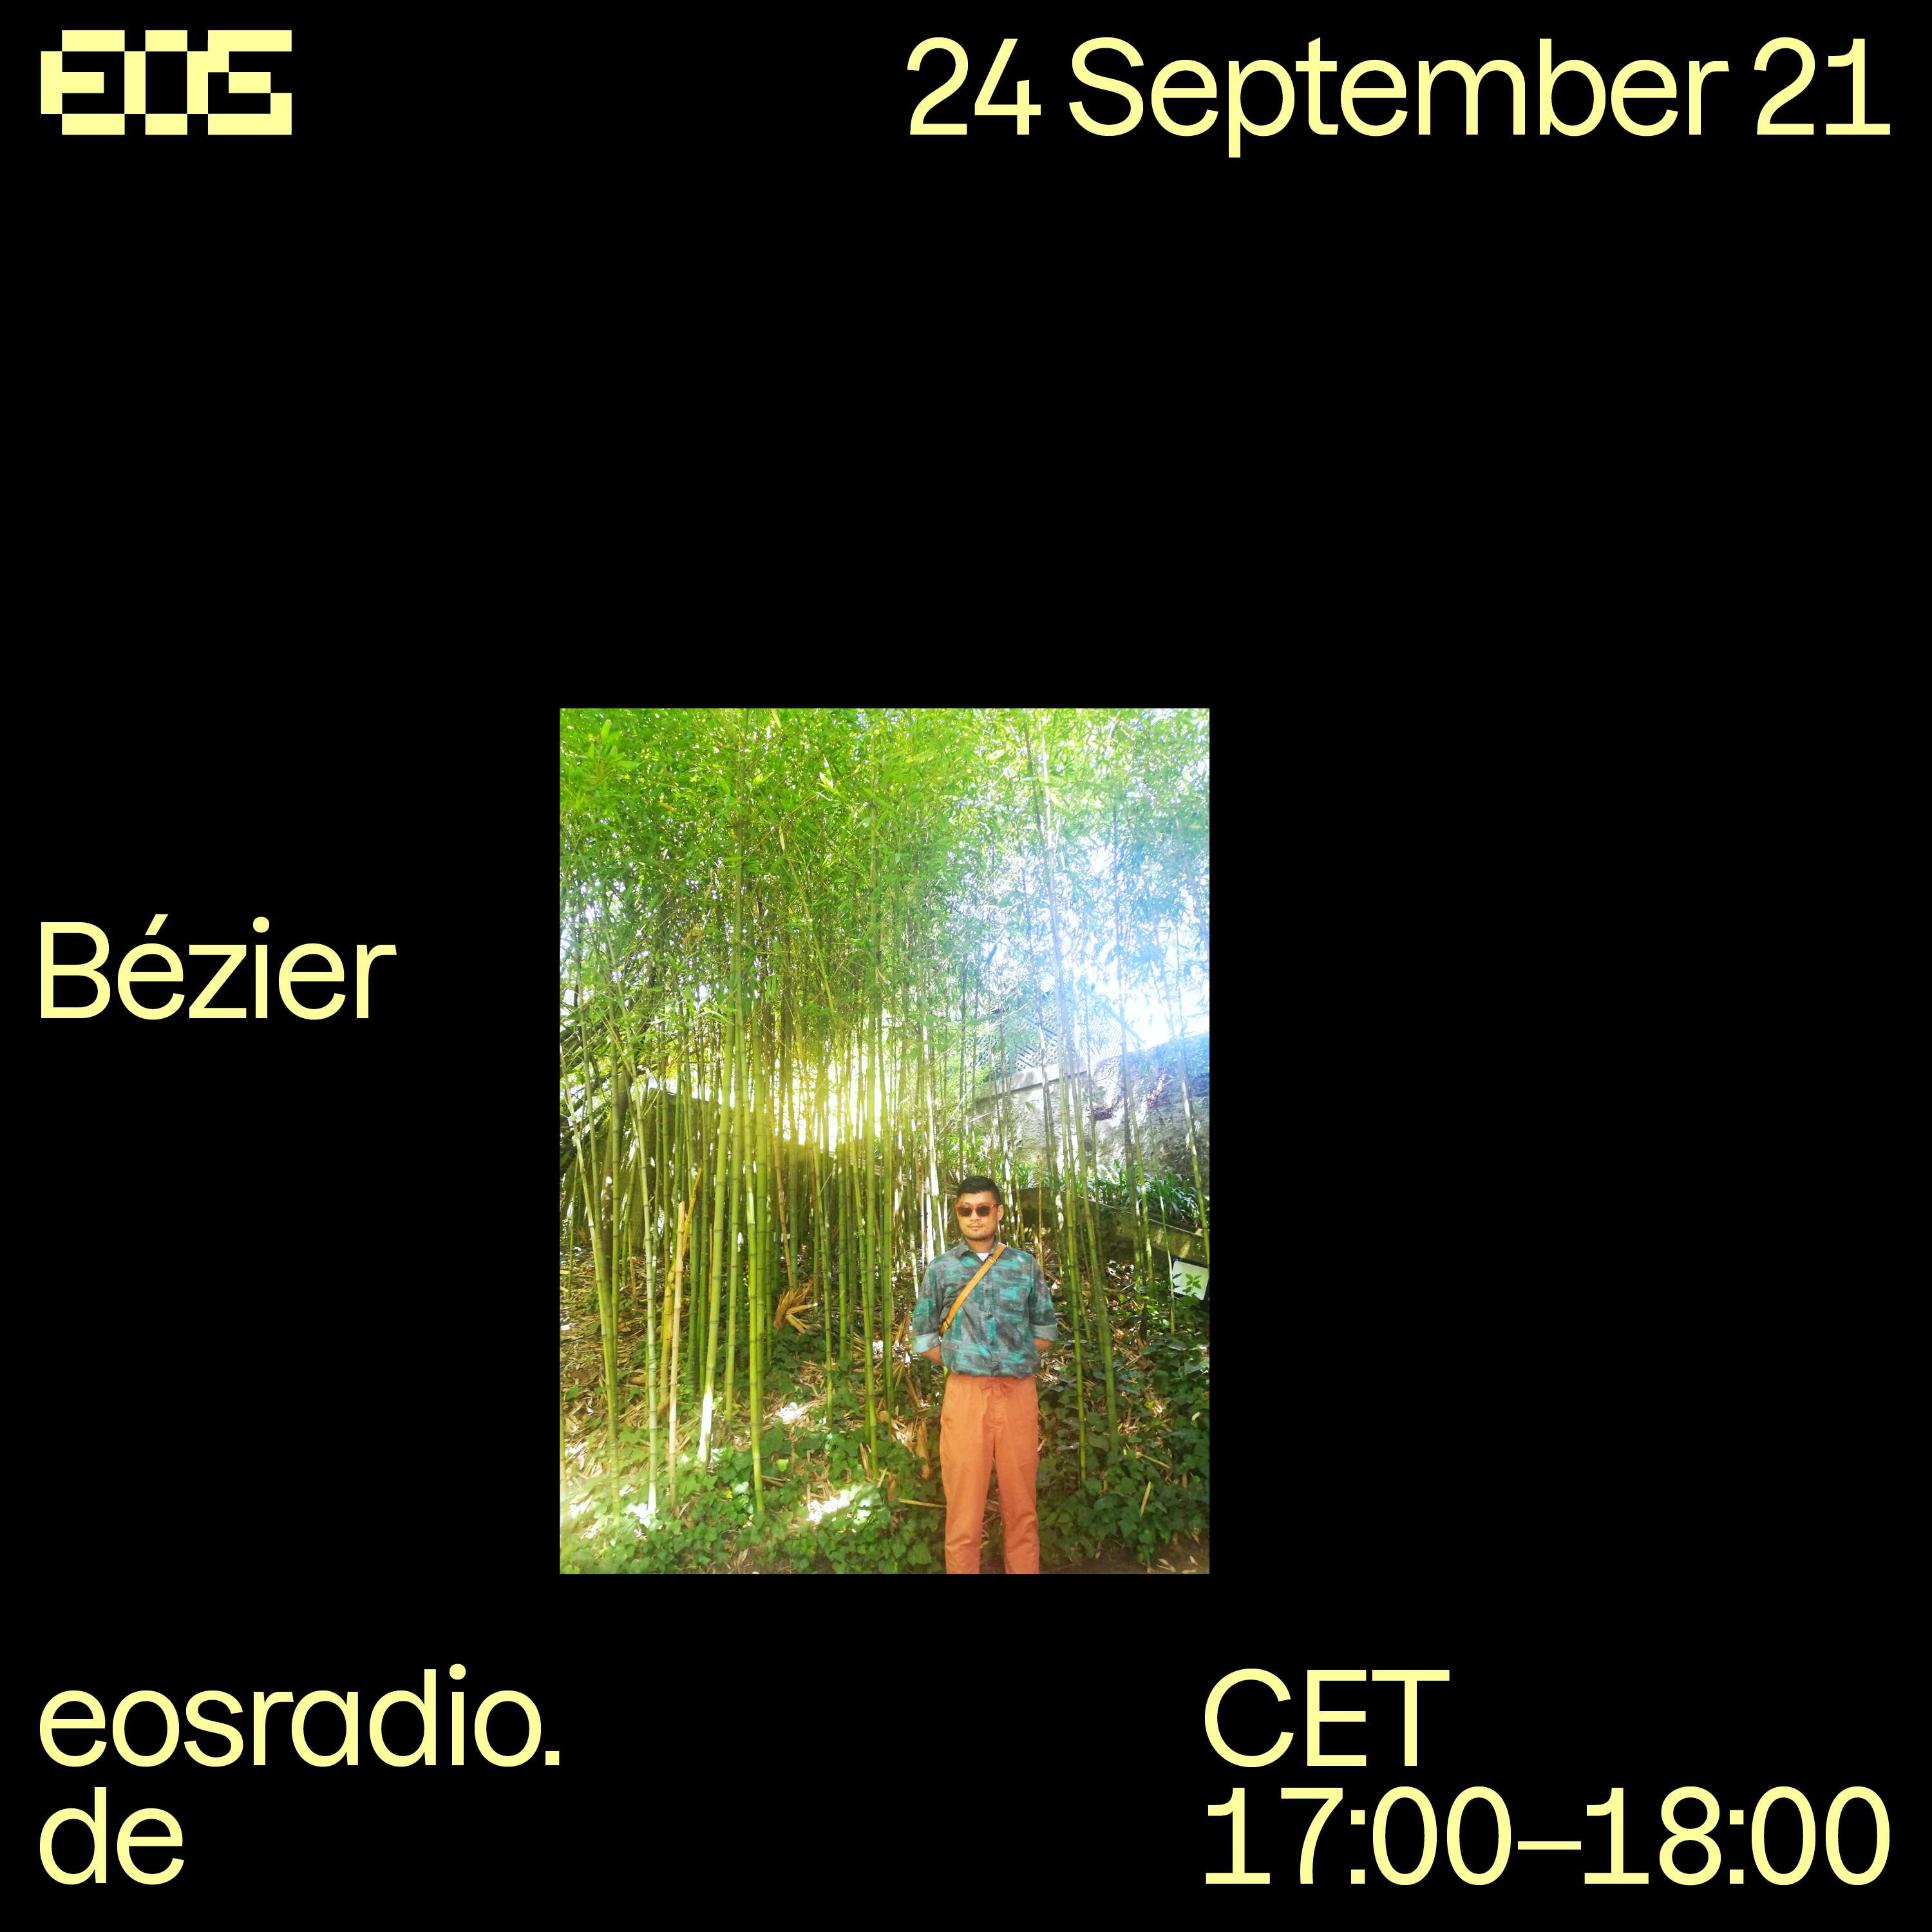 Image for Frankfurt based radio station eosradio.de for monthly Bézier Residency September 2021